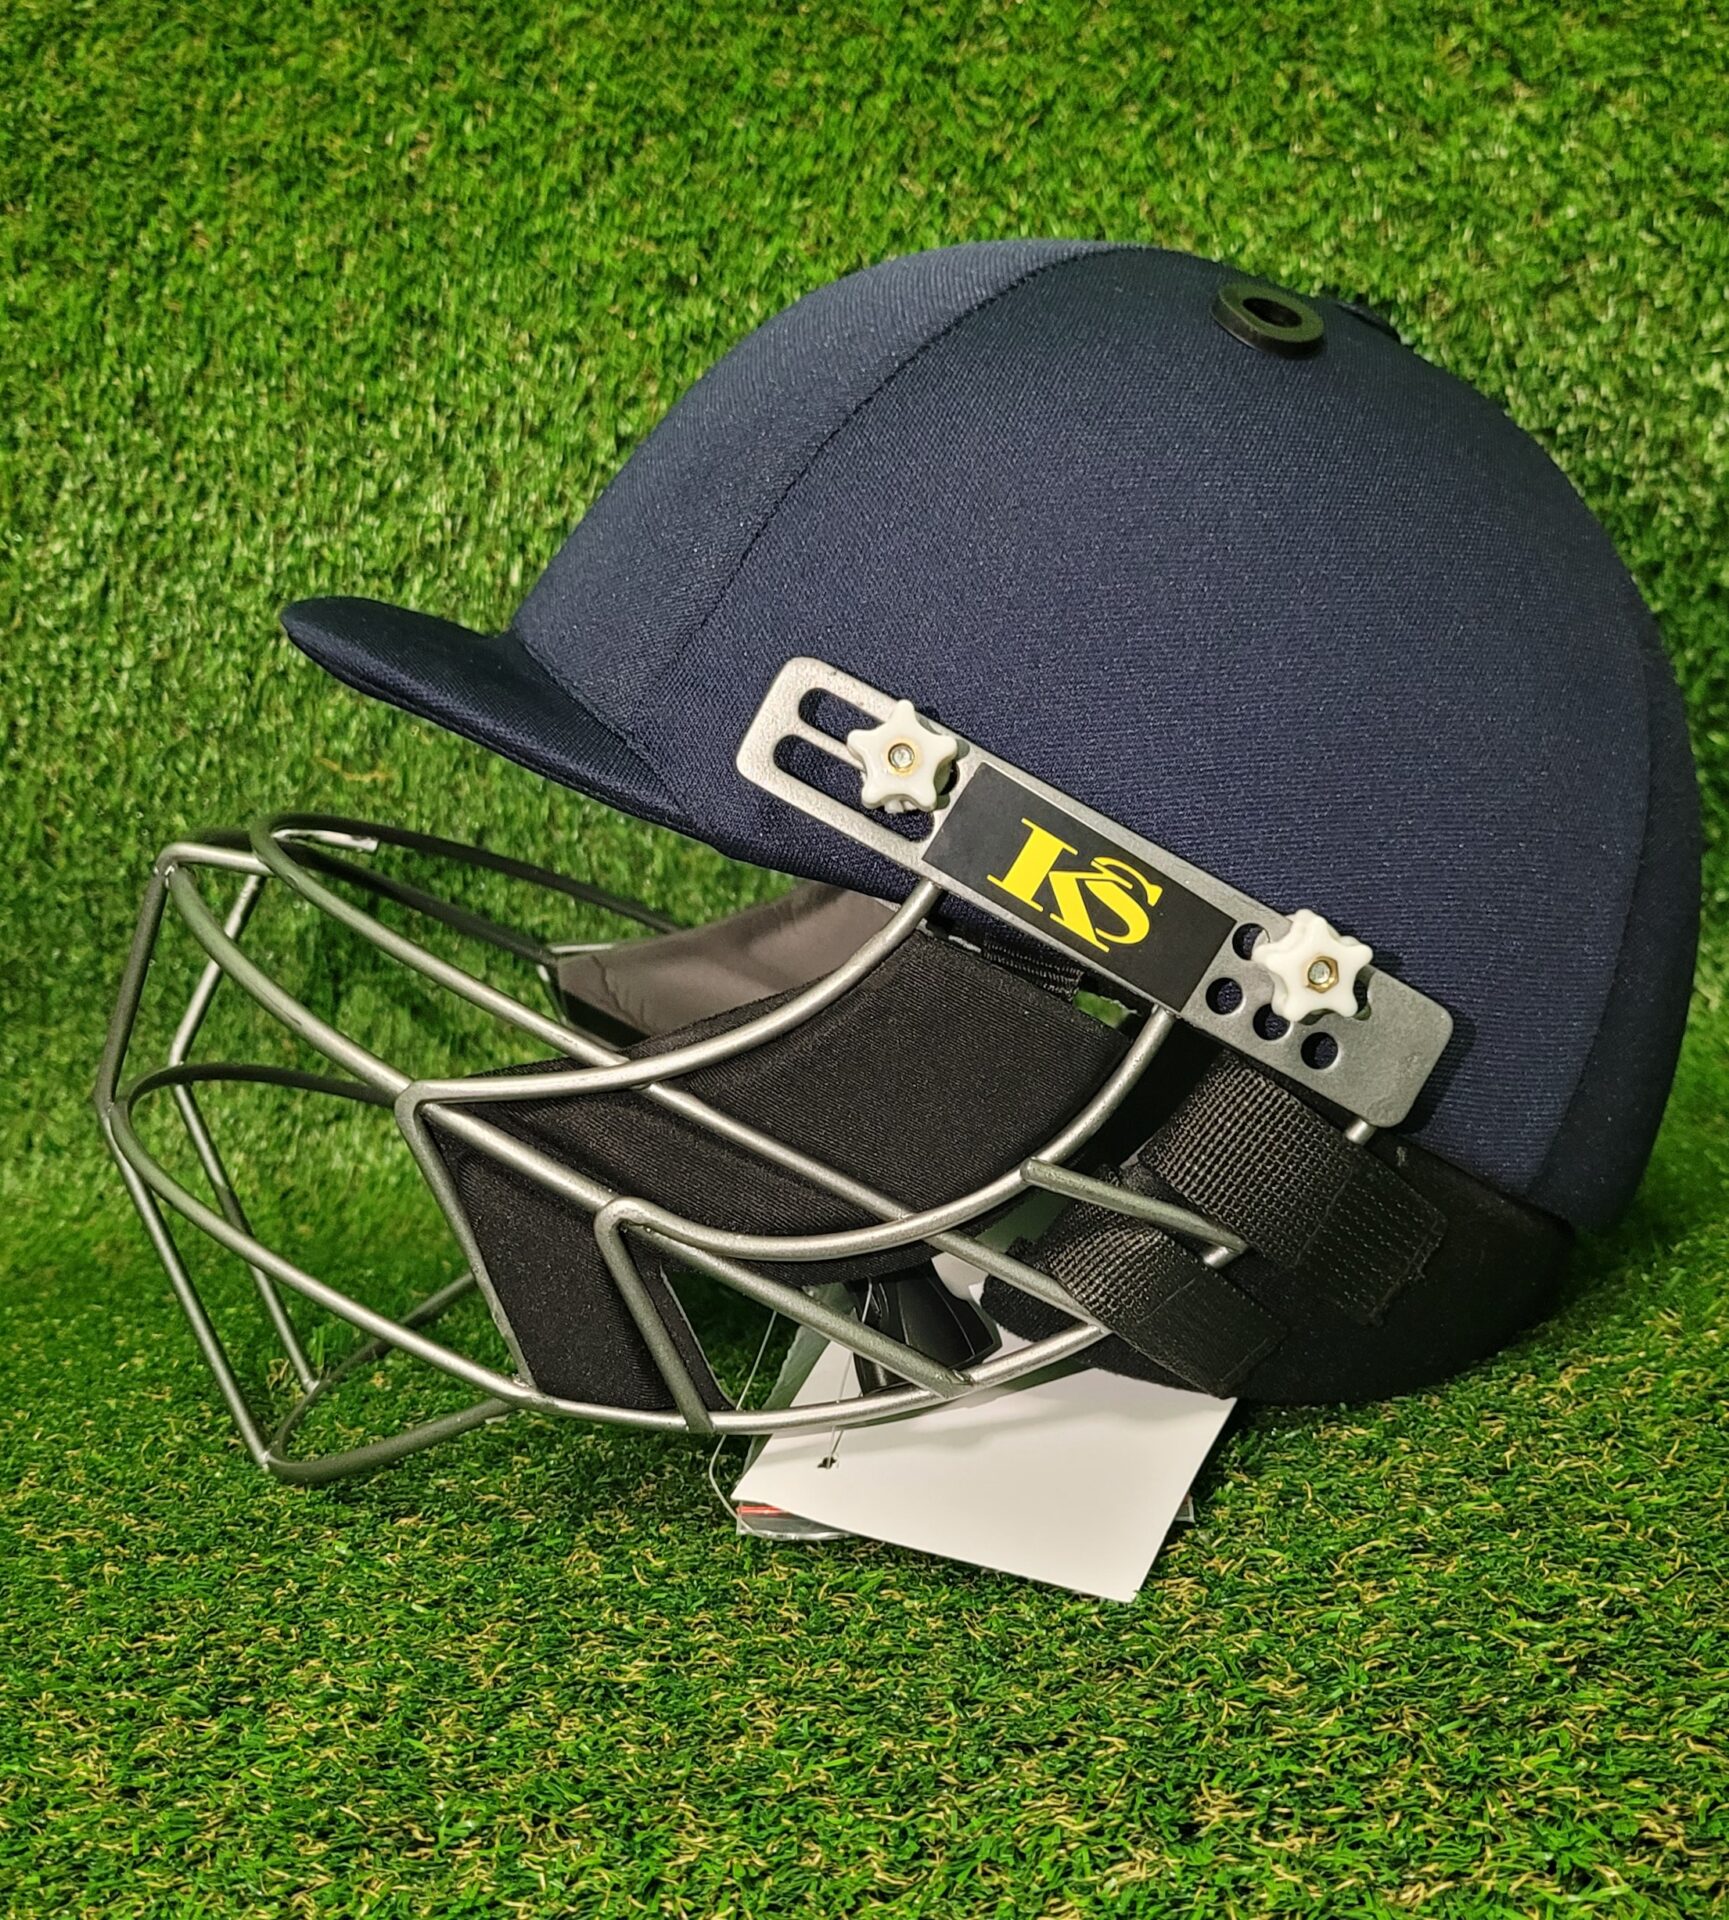 Ks Cricket Double Grill Helmet Adult Size Adjustable Excellent